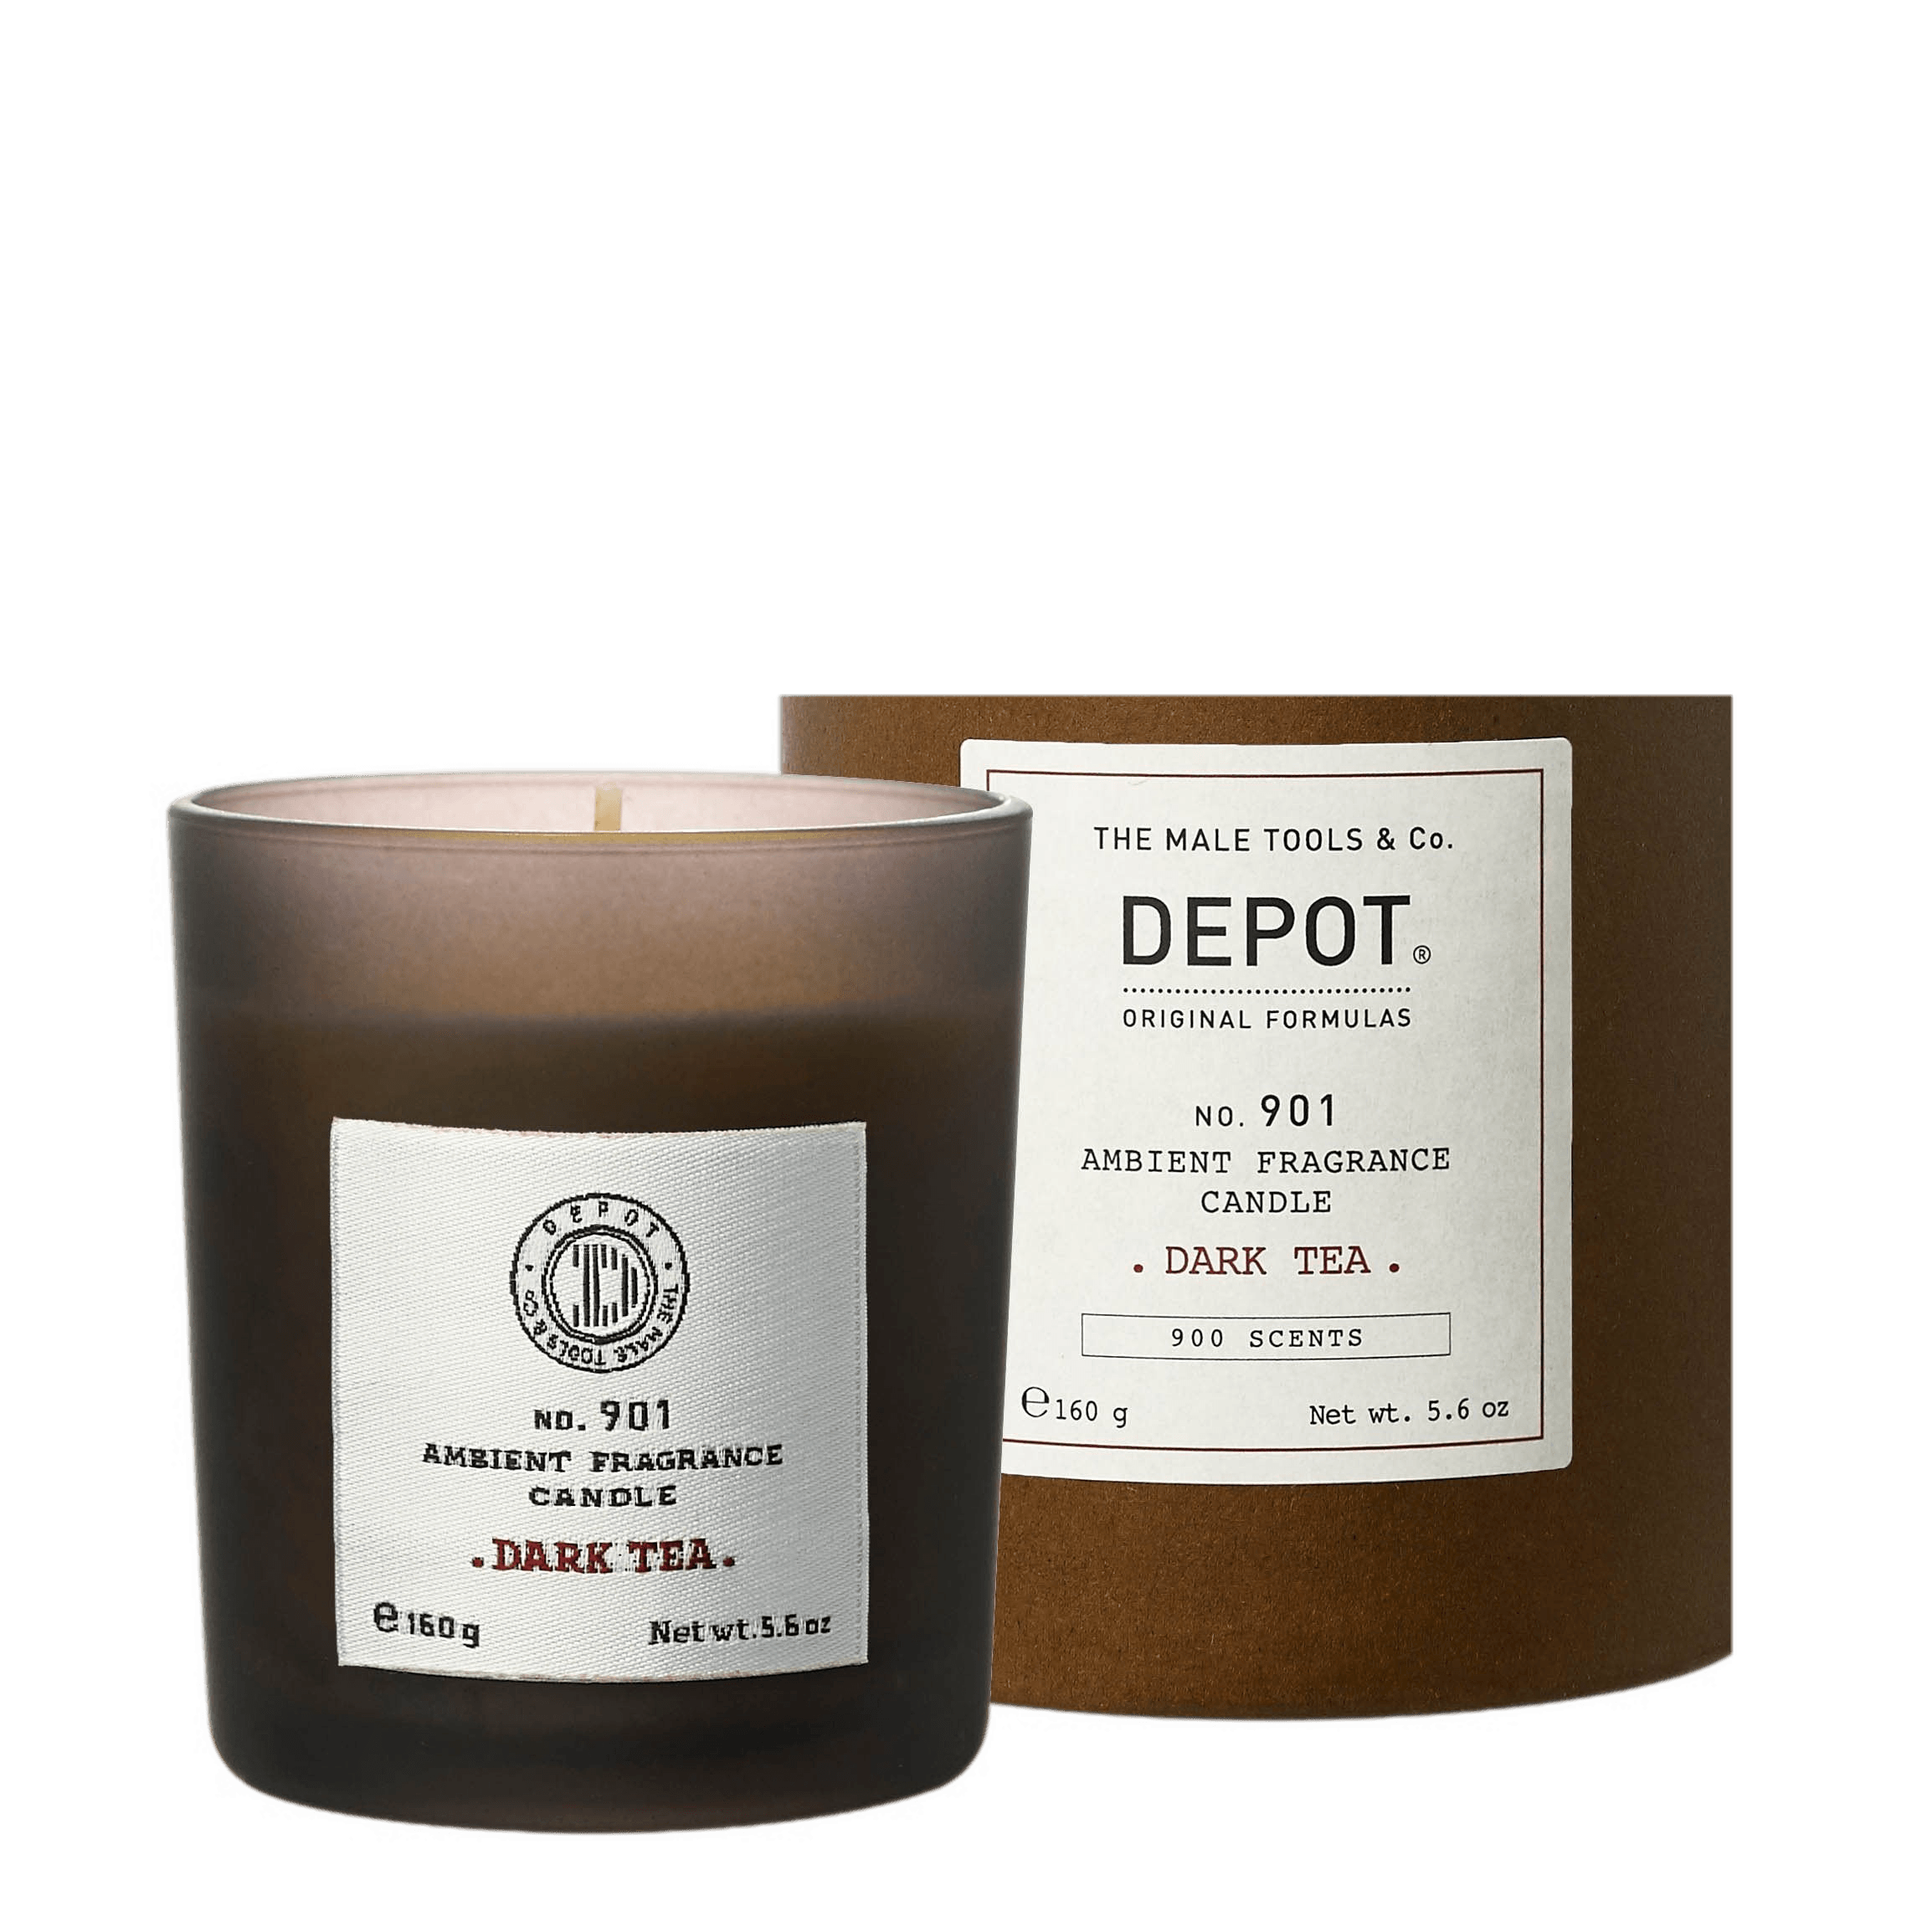 Depot No. 901 Ambient Fragrance Candle Dark Tea